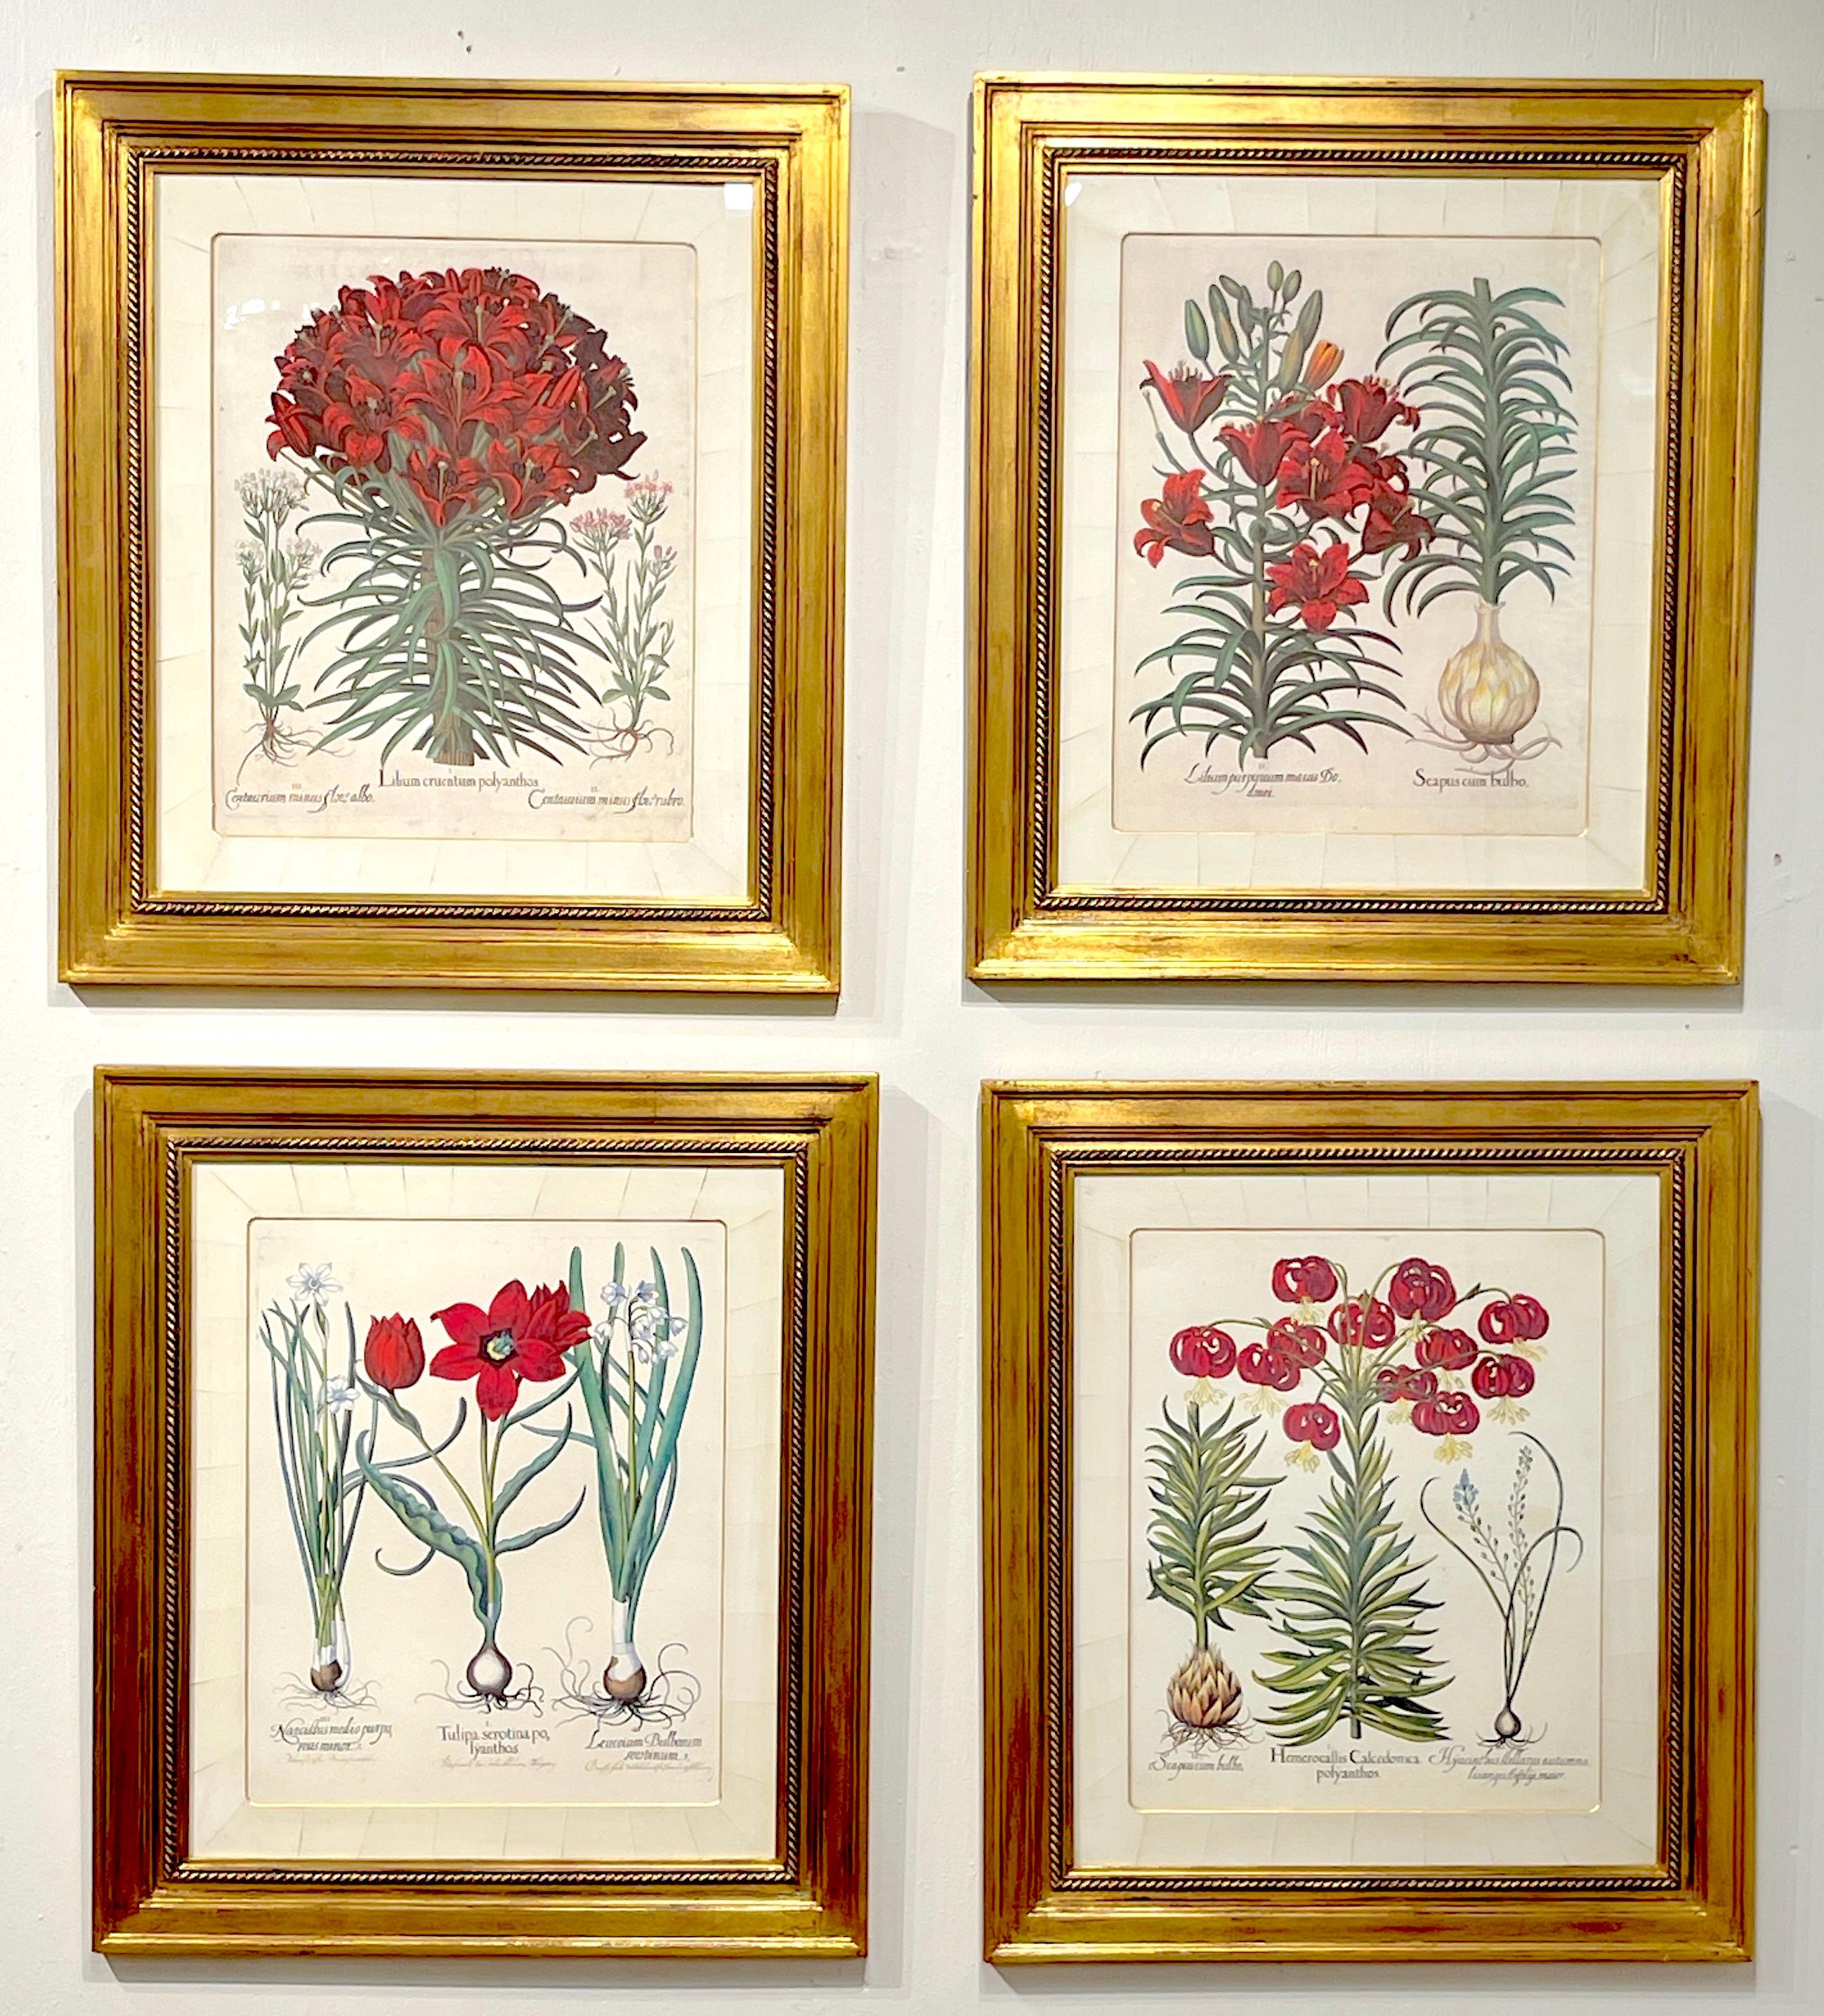 Set of Four Antique Basilius Besler Botanical Prints With Custom Parchment Mats, sold as a set of four only.
Basilius Besler (1561-1629)

This custom framed set of  botanicals comprises four exquisite antique Basilius Besler botanical prints,